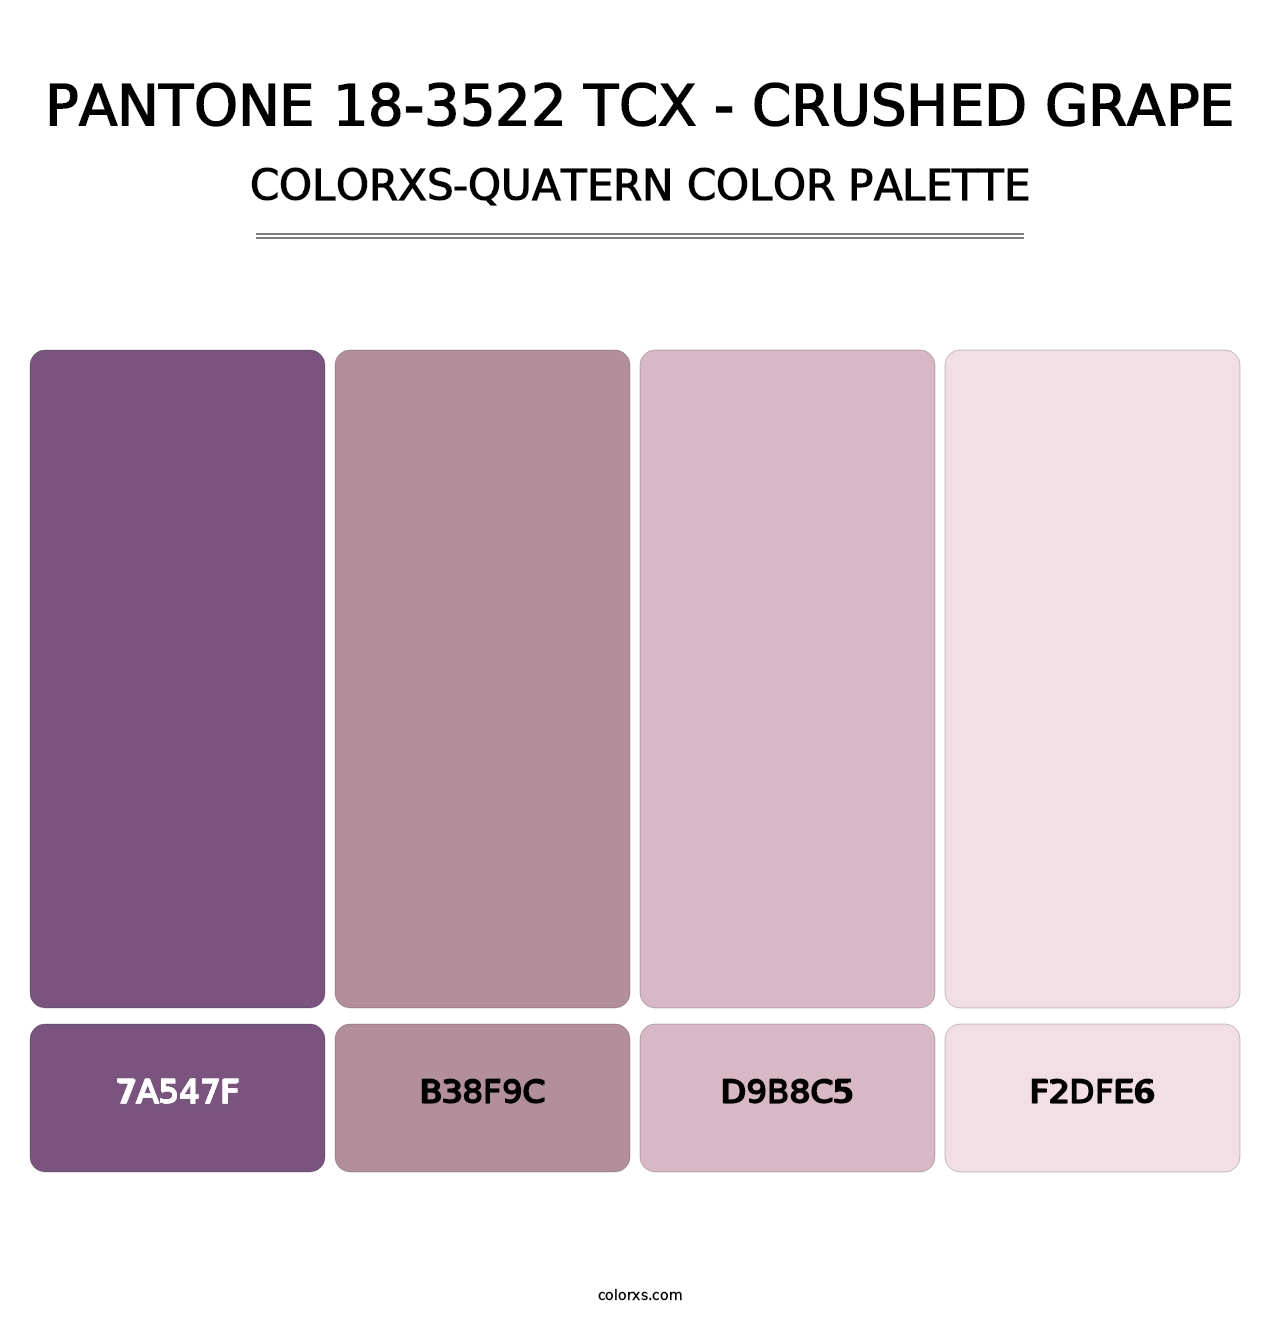 PANTONE 18-3522 TCX - Crushed Grape - Colorxs Quatern Palette